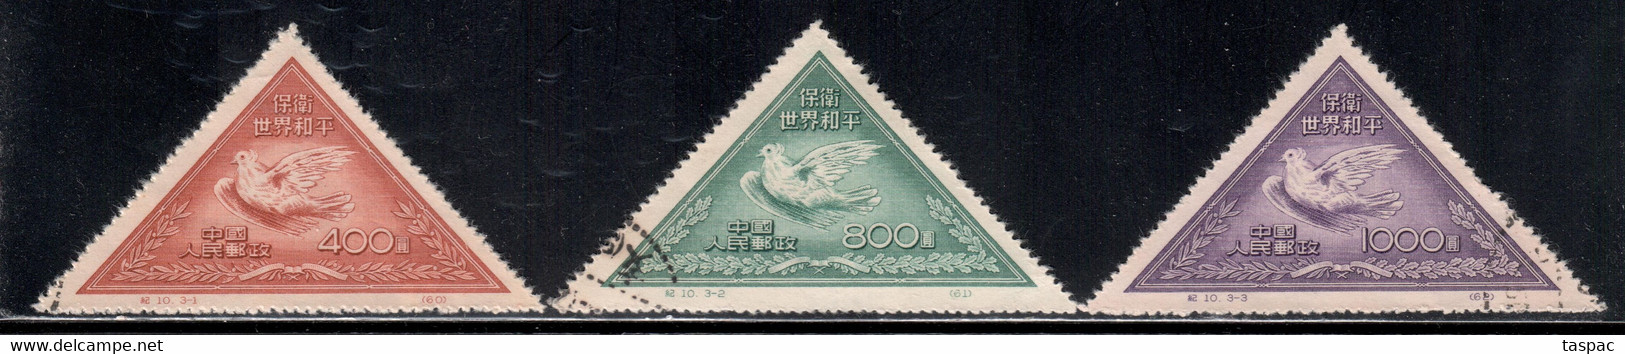 China P.R. 1951 Mi# 113-115 II Used - Reprints - Picasso Dove - Reimpresiones Oficiales